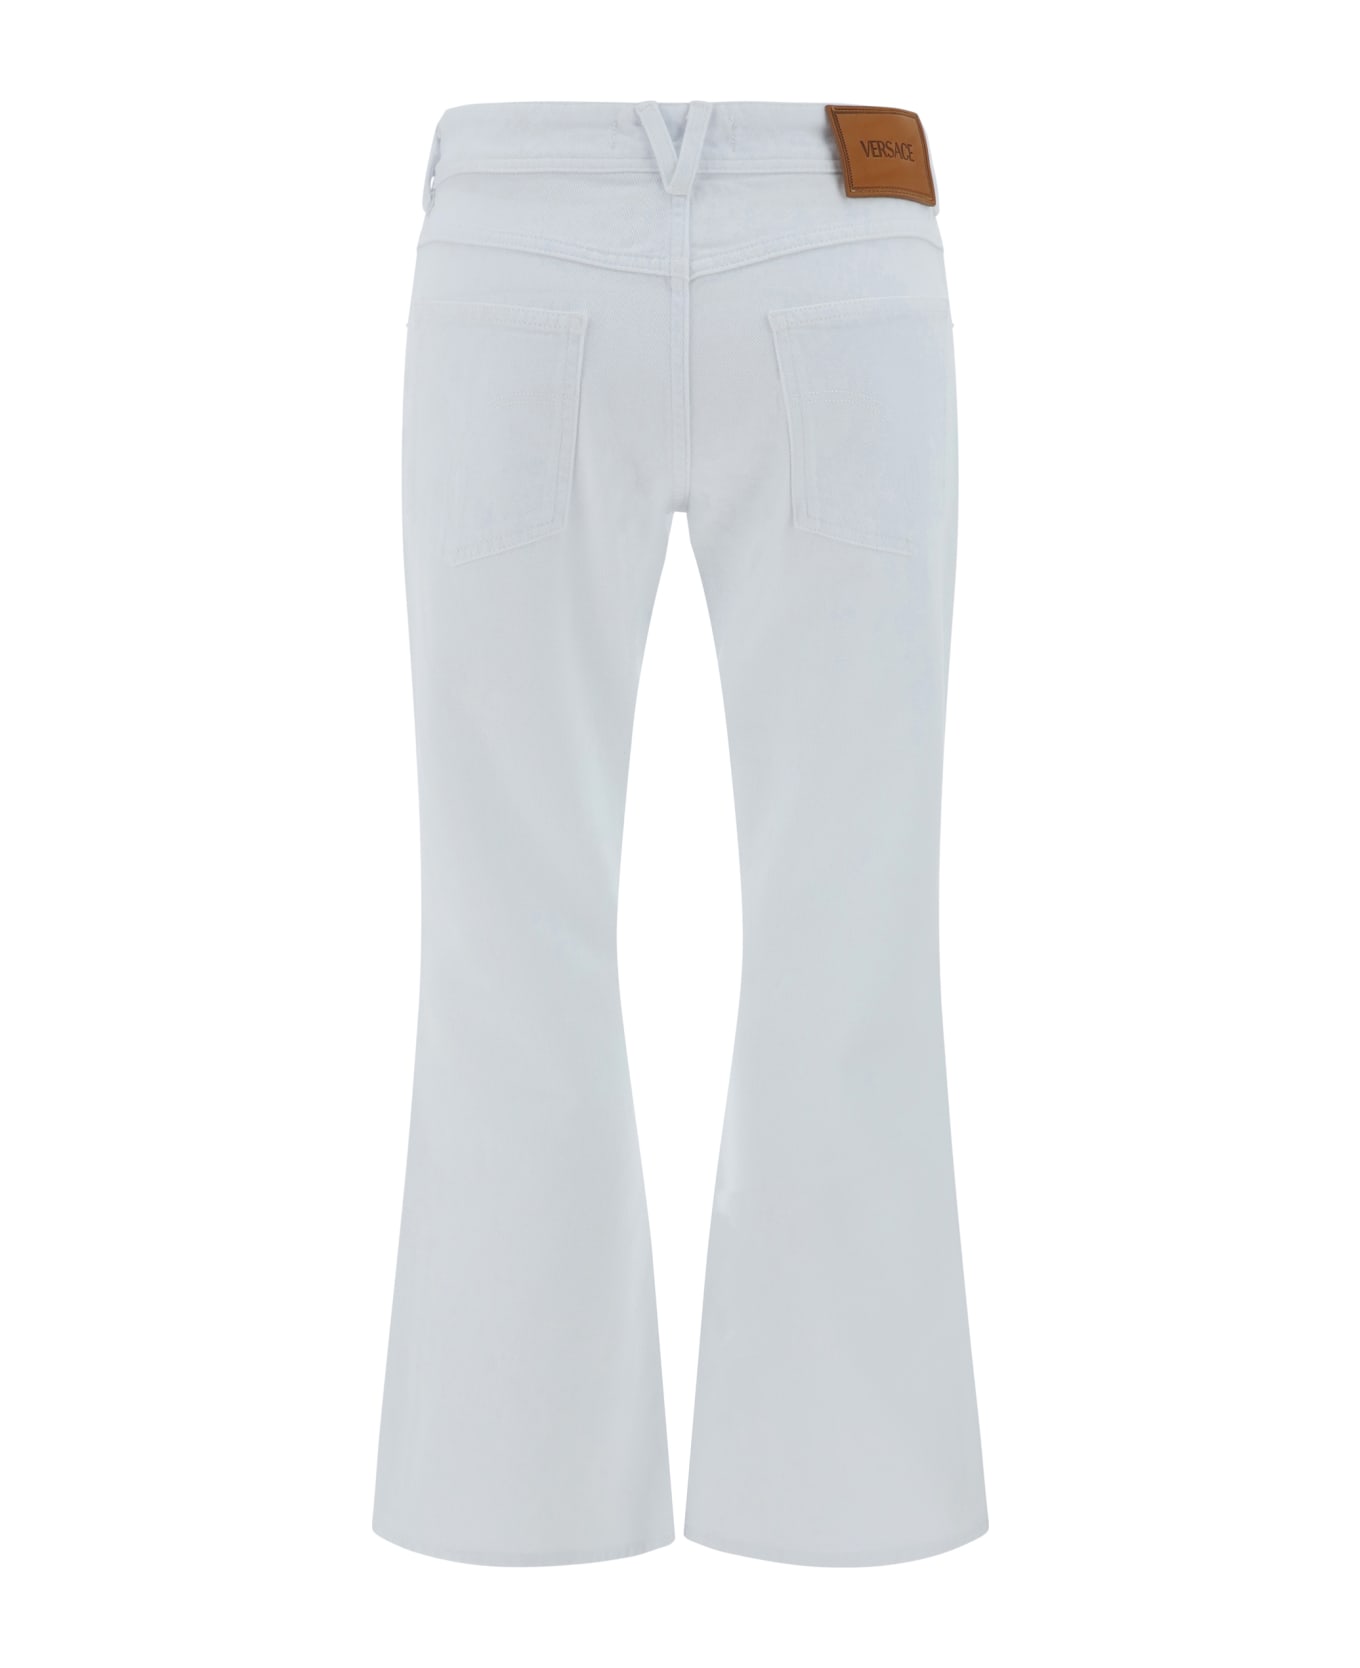 Versace White Cotton Jeans - White ボトムス